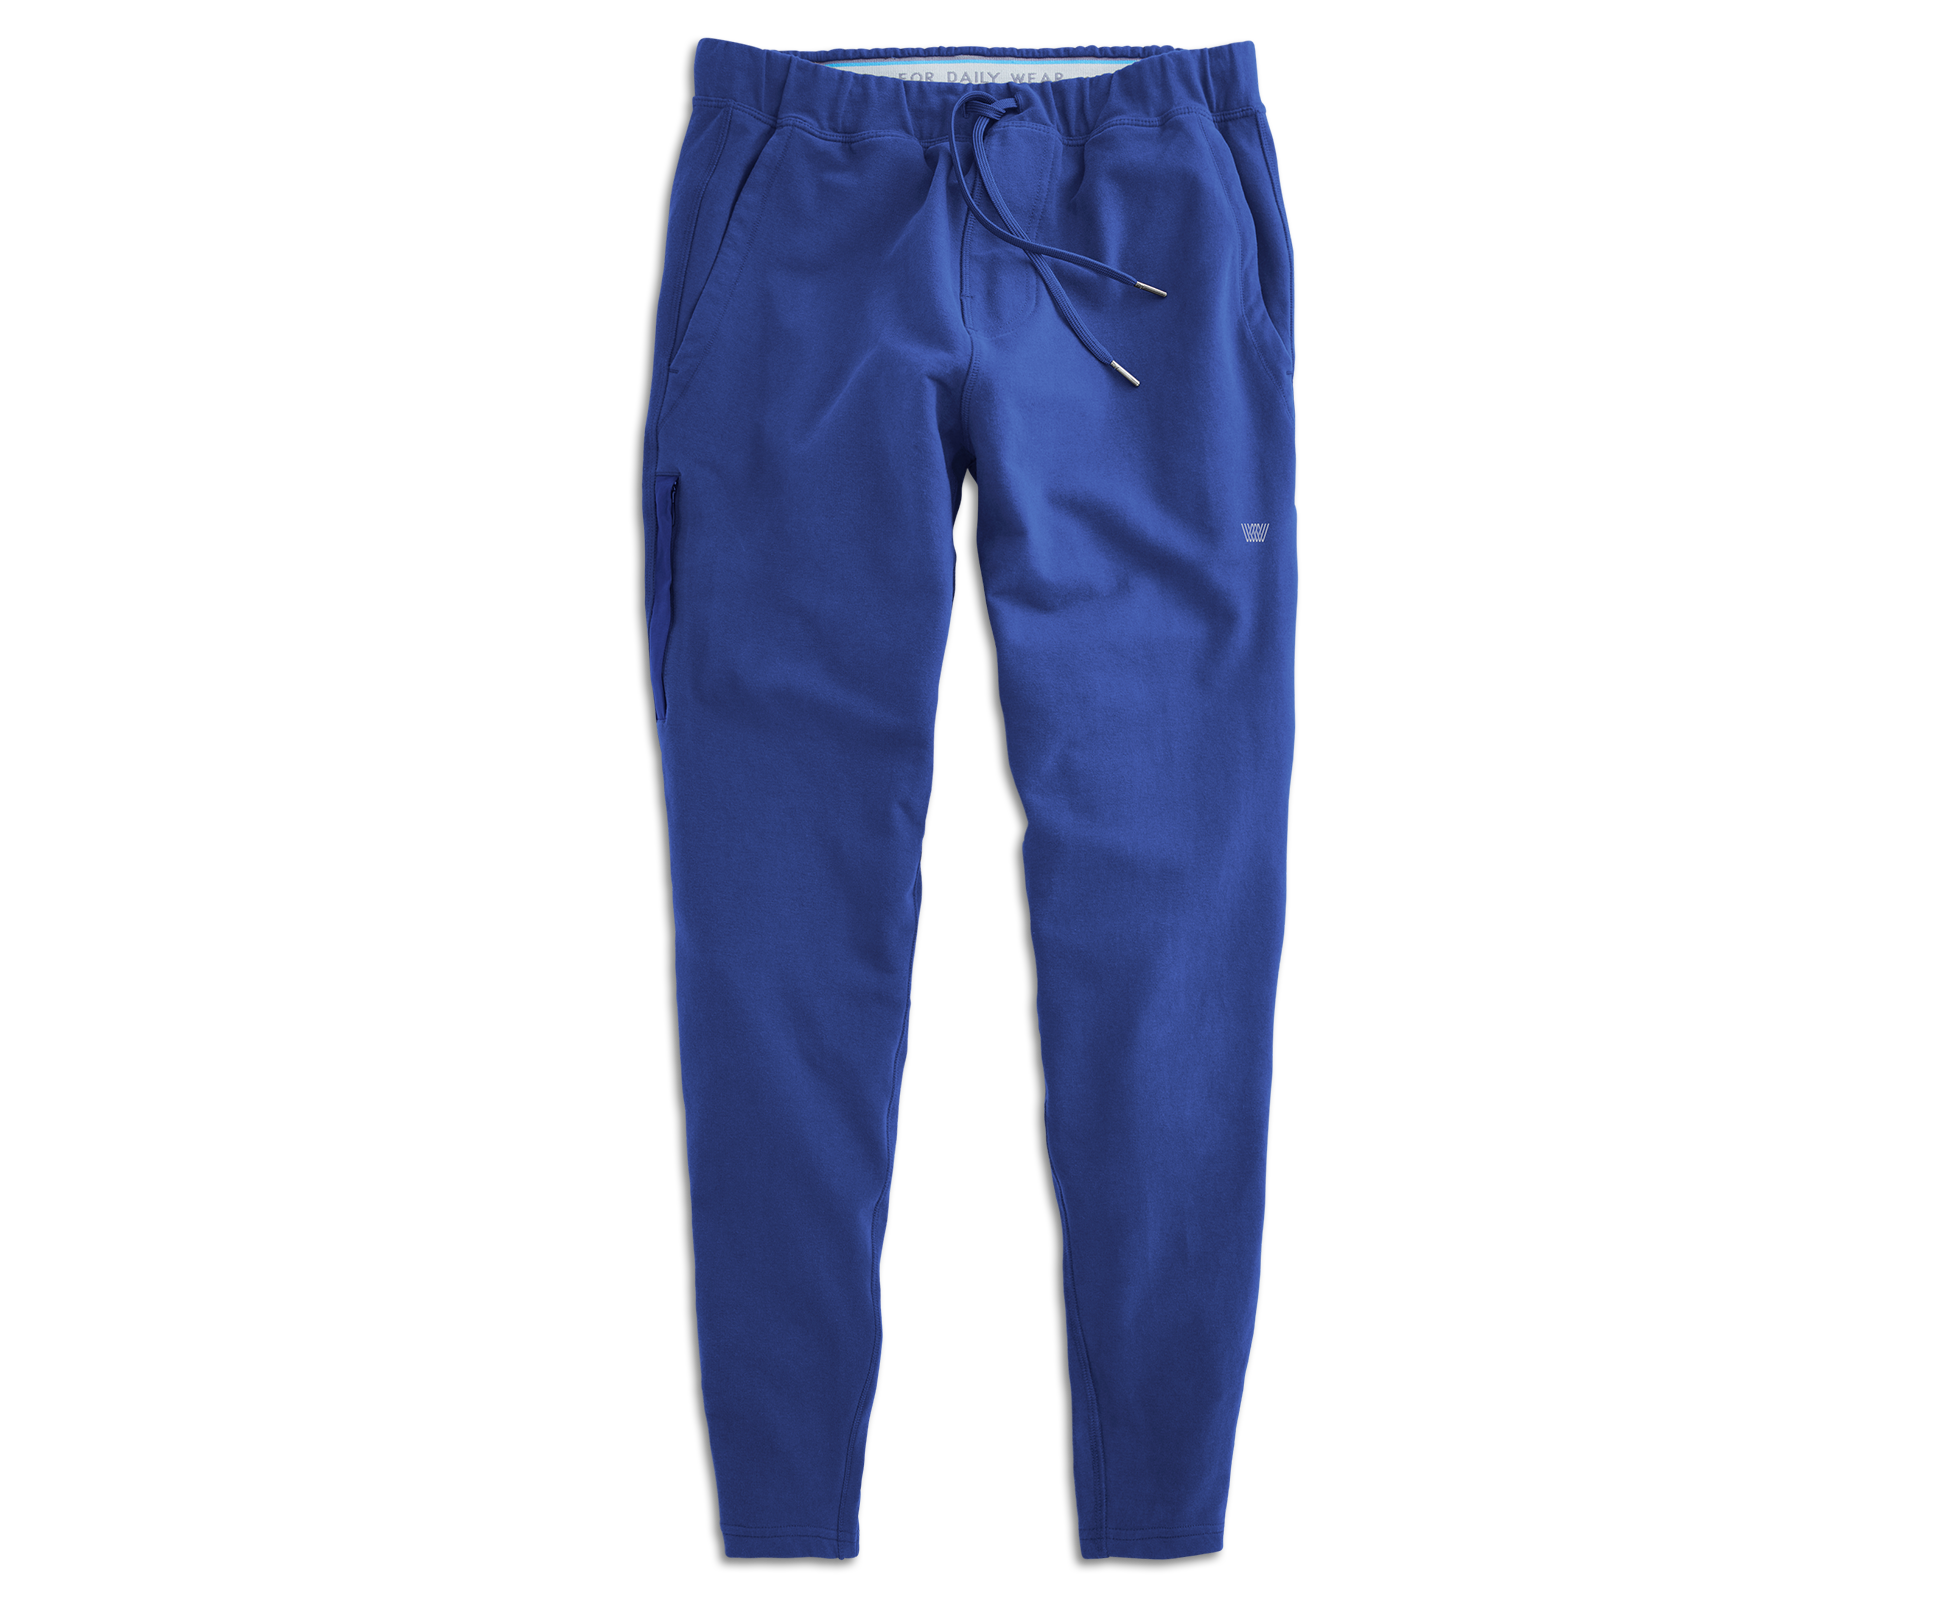 NEW! Mack Weldon Ace Sweatpants Coolant Blue Mens Size Medium M -  Discontinued